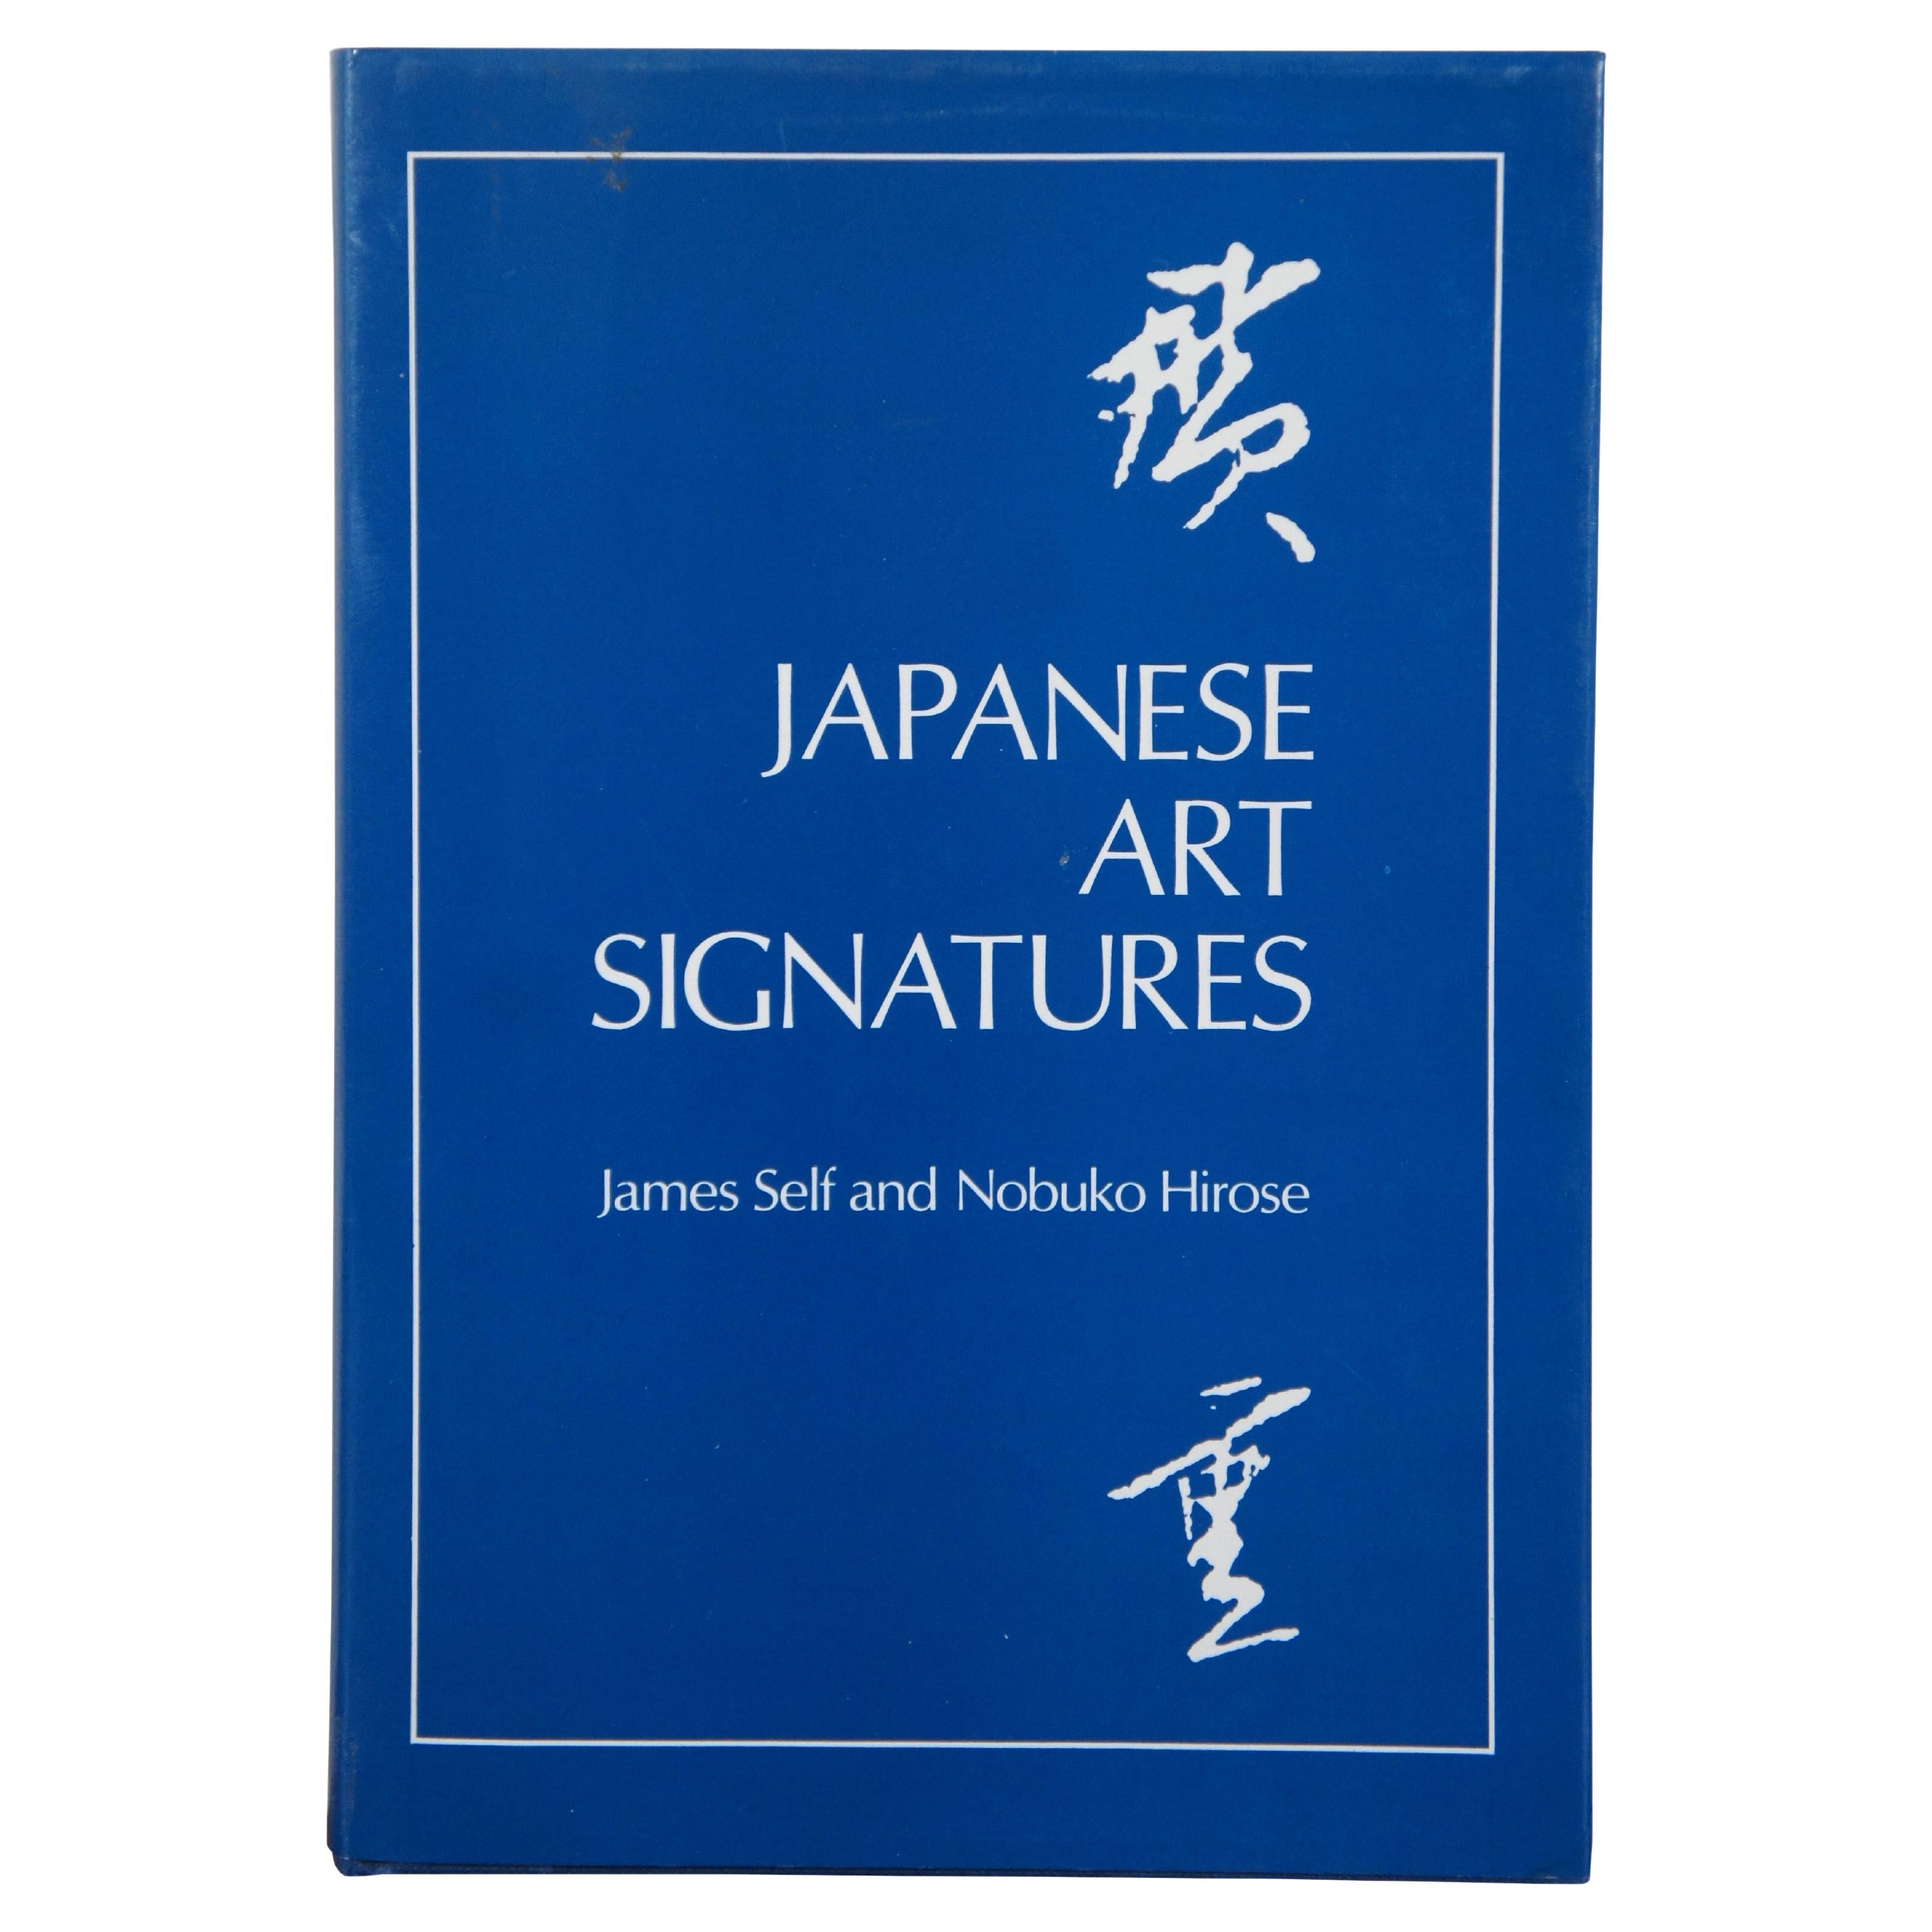 Japanese Art Signatures Handbook & Practical Guide Self & Hirose Hardback 1987 